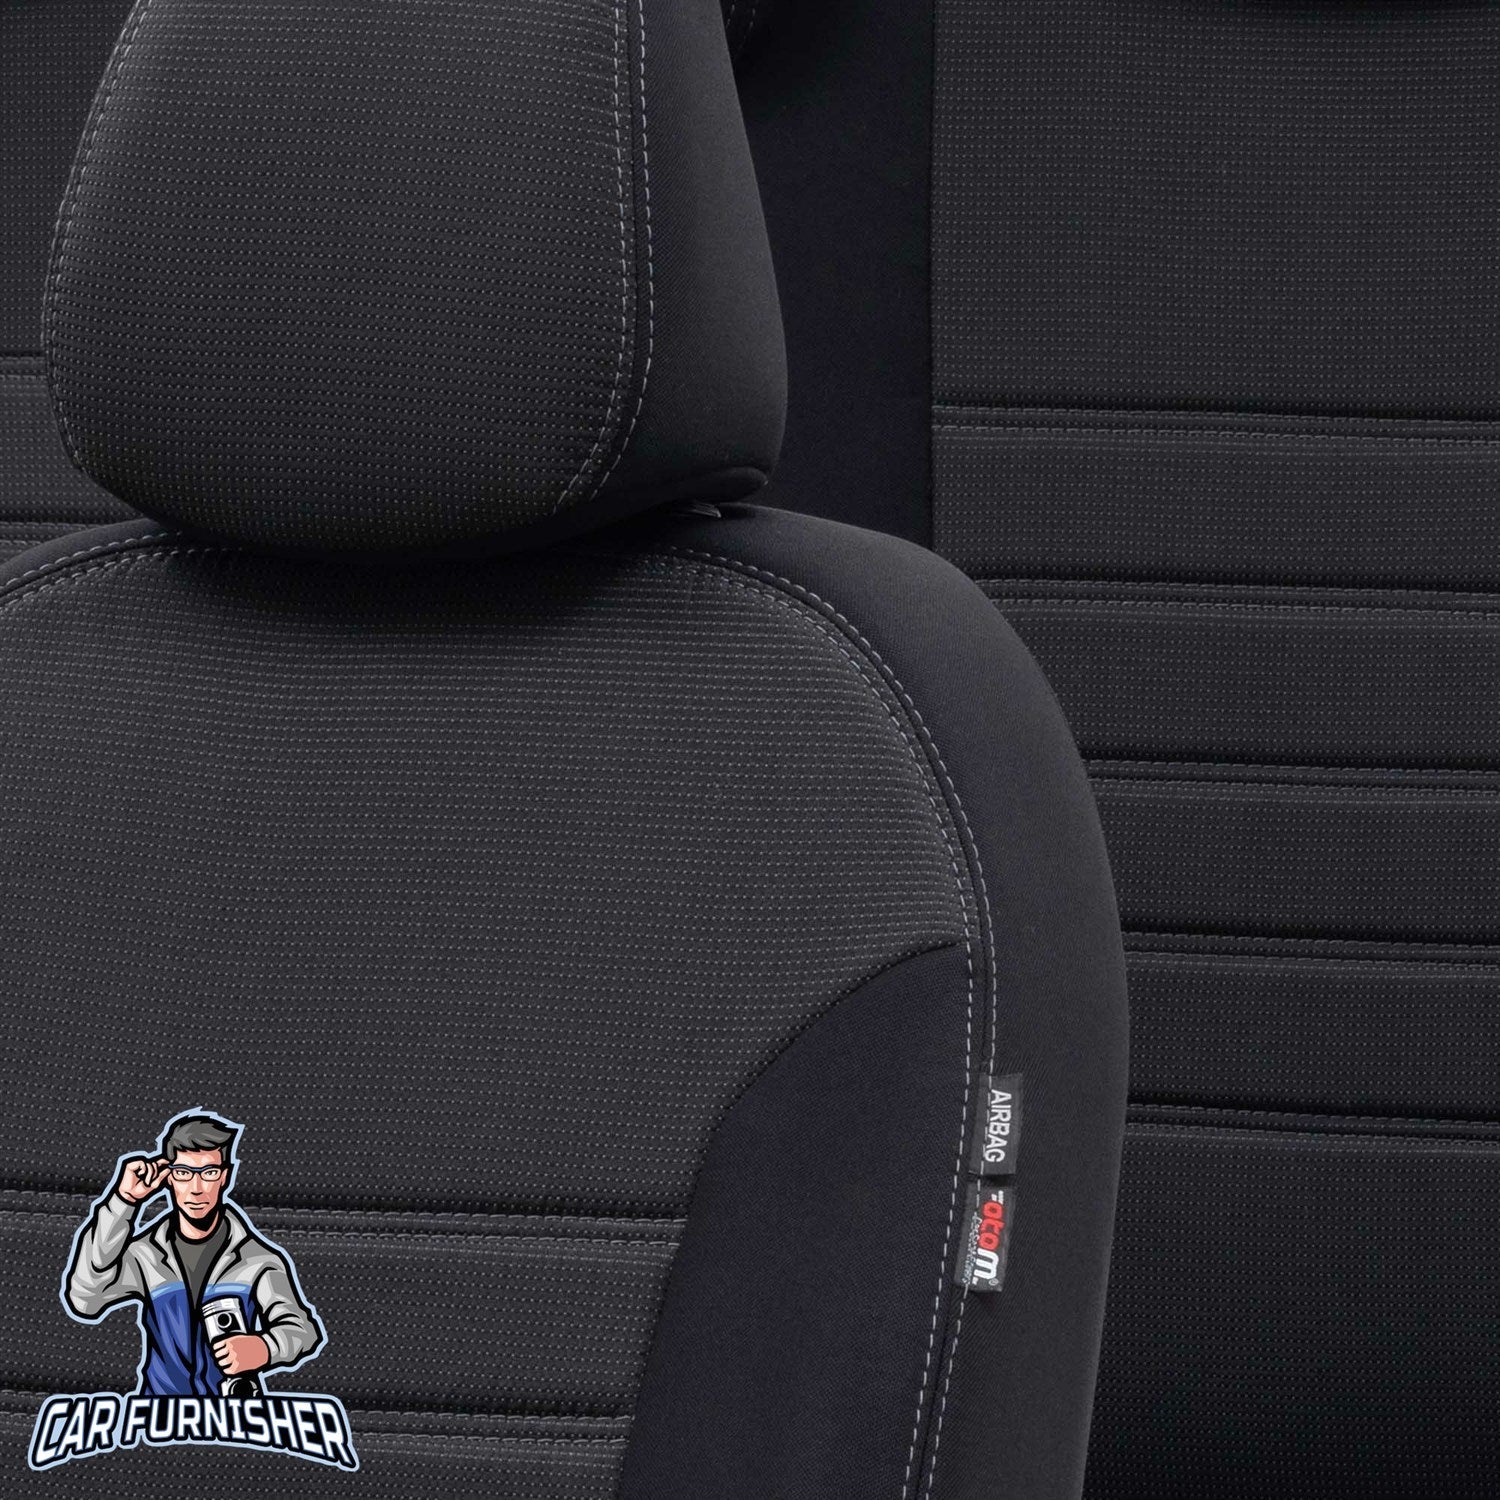 Chery Alia Car Seat Covers 2008-2011 Original Design Dark Gray Full Set (5 Seats + Handrest) Fabric